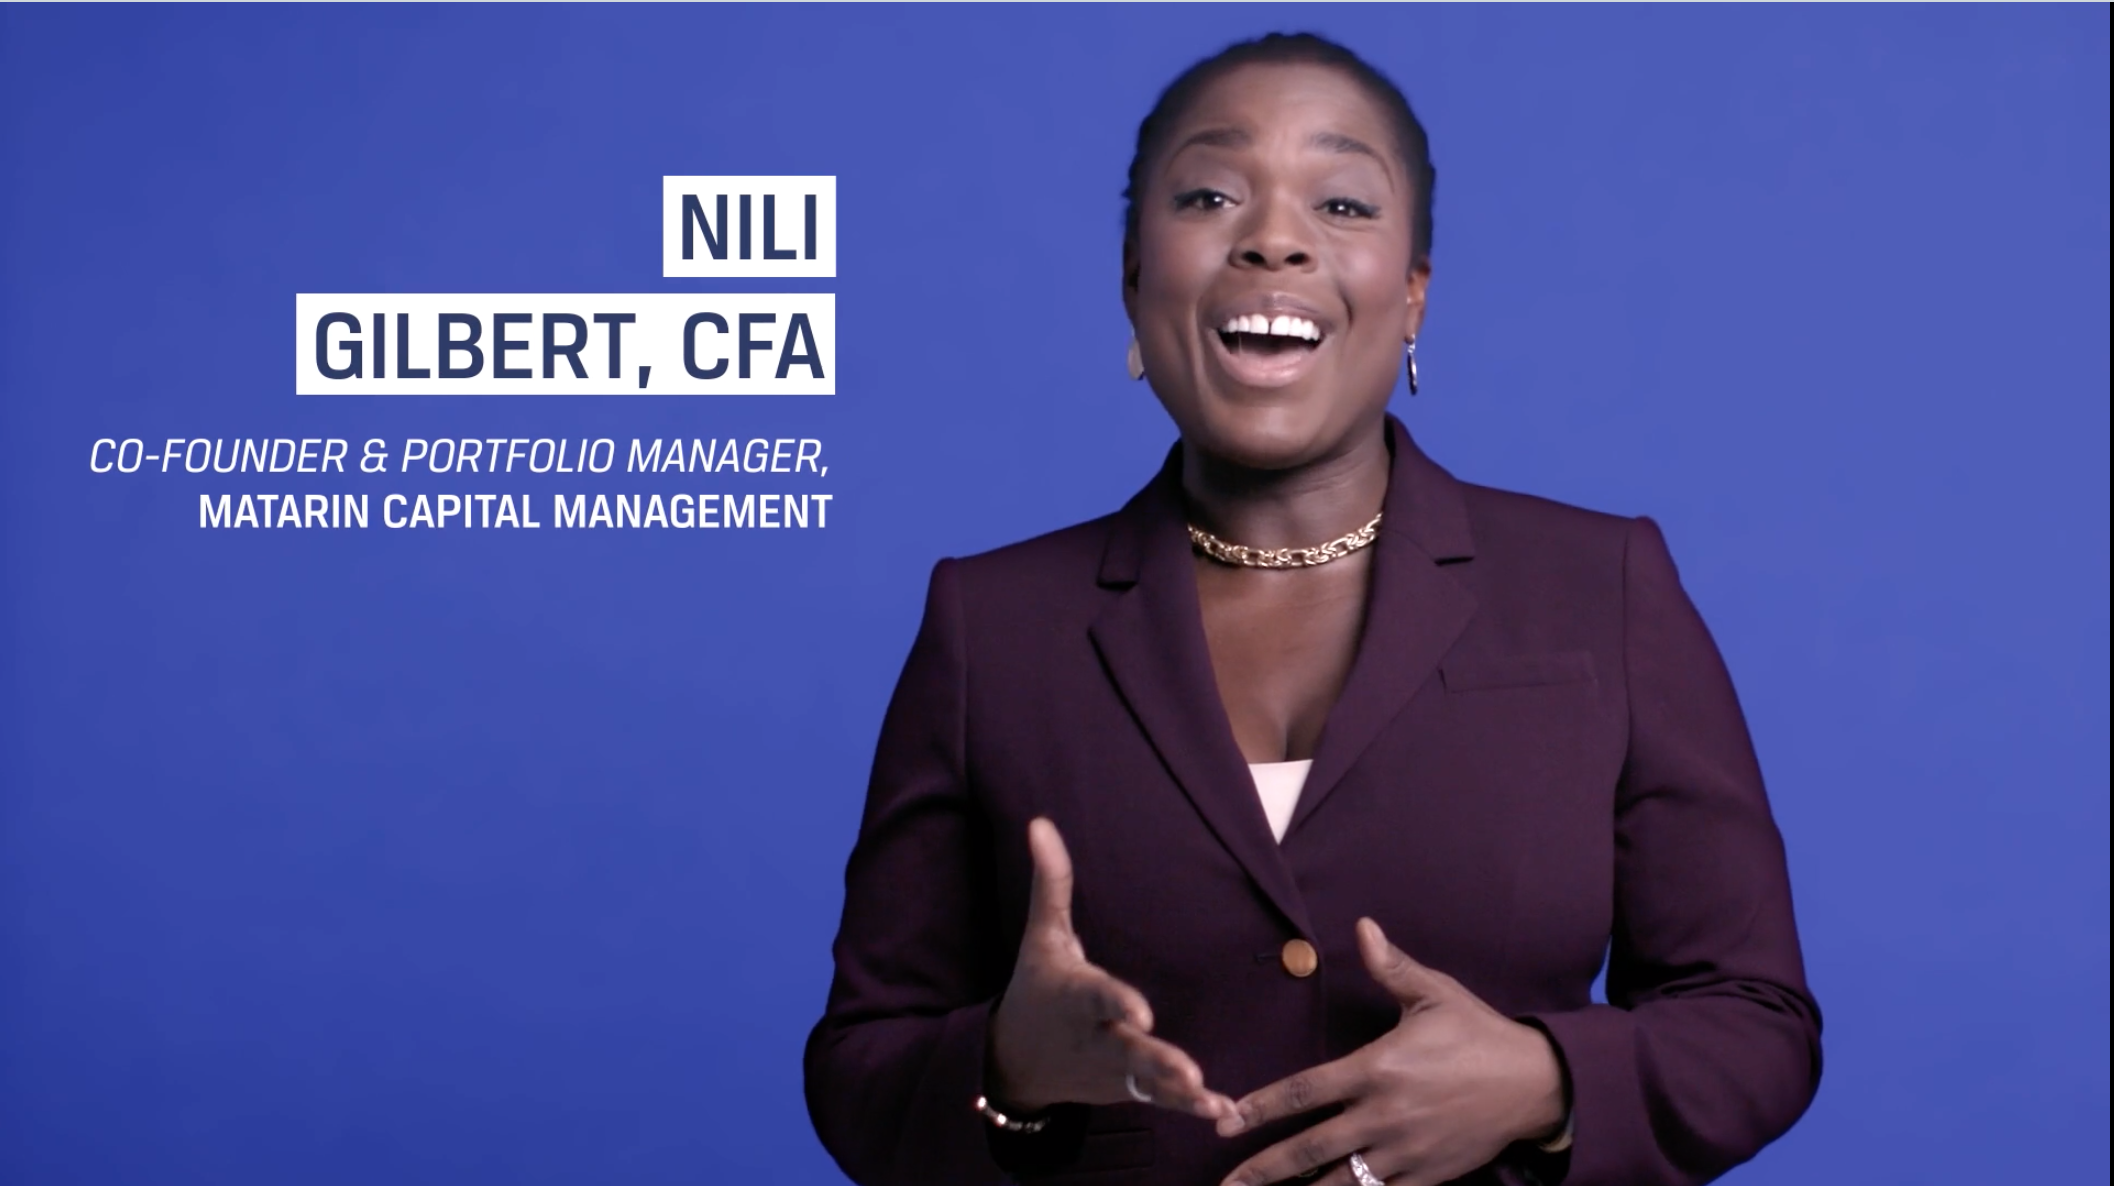 CFA Institute - "Let's Measure Up" campaign